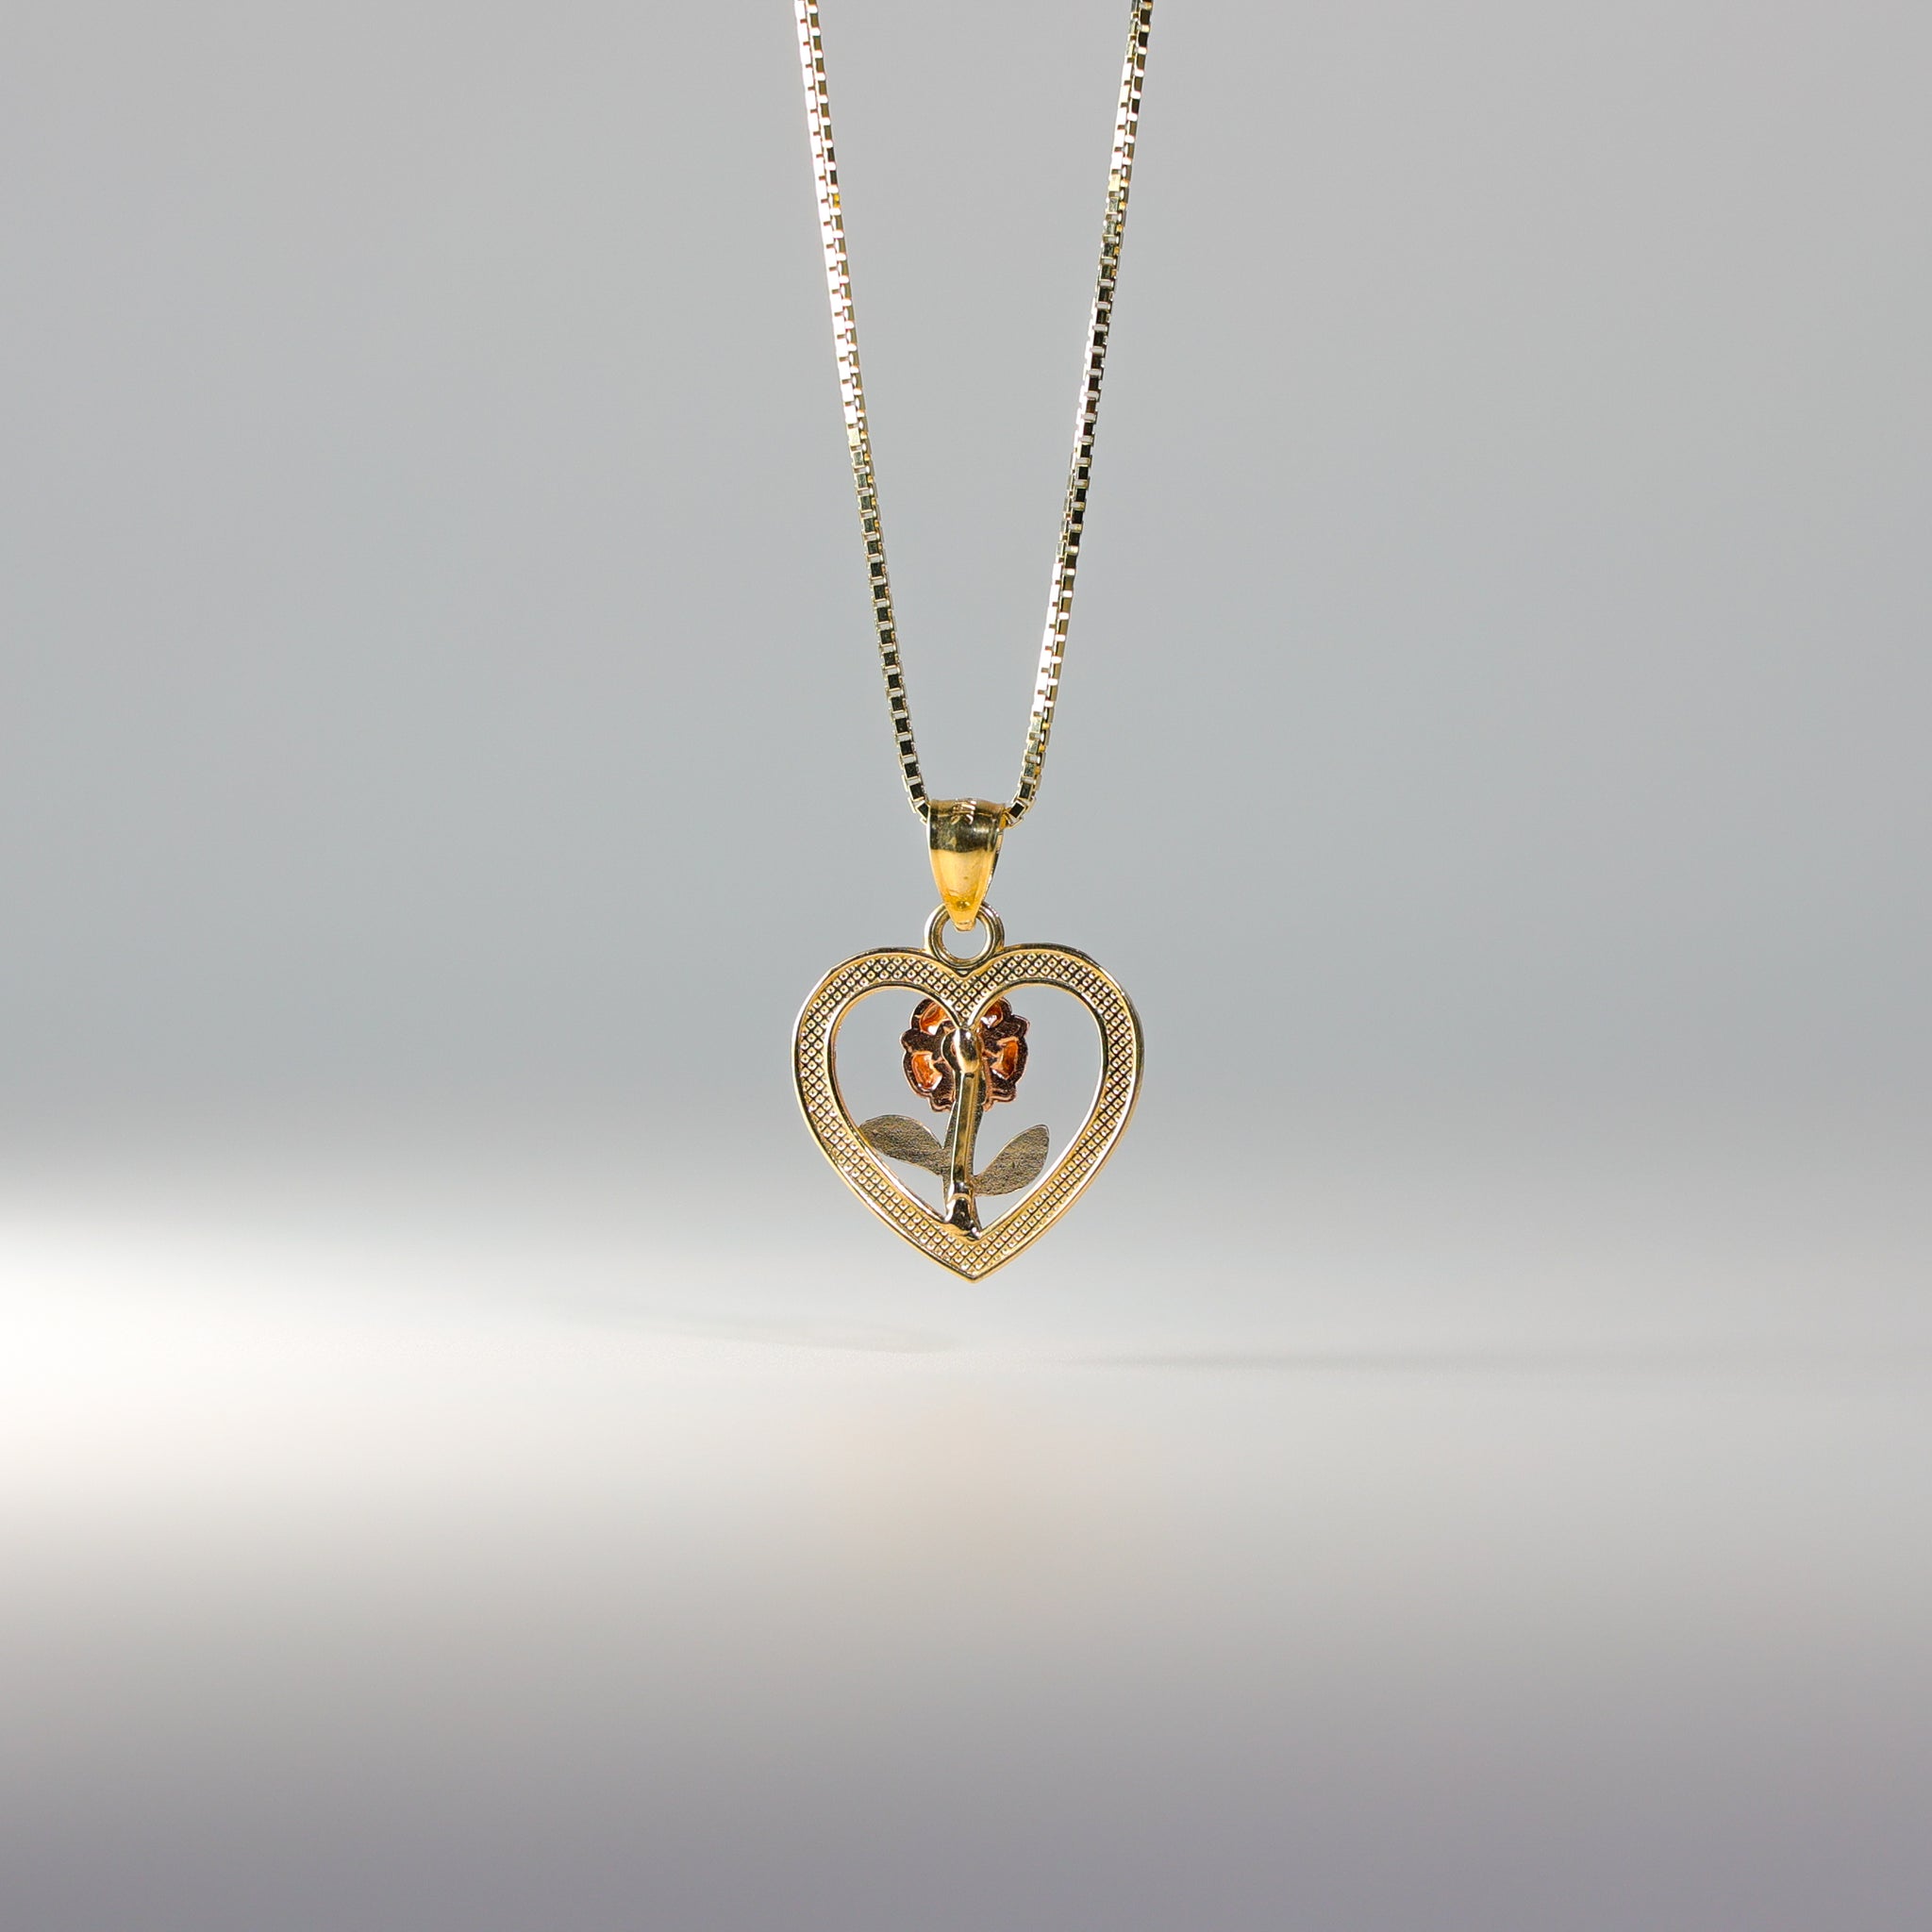 Gold Flower Heart Pendant Model-394 - Charlie & Co. Jewelry